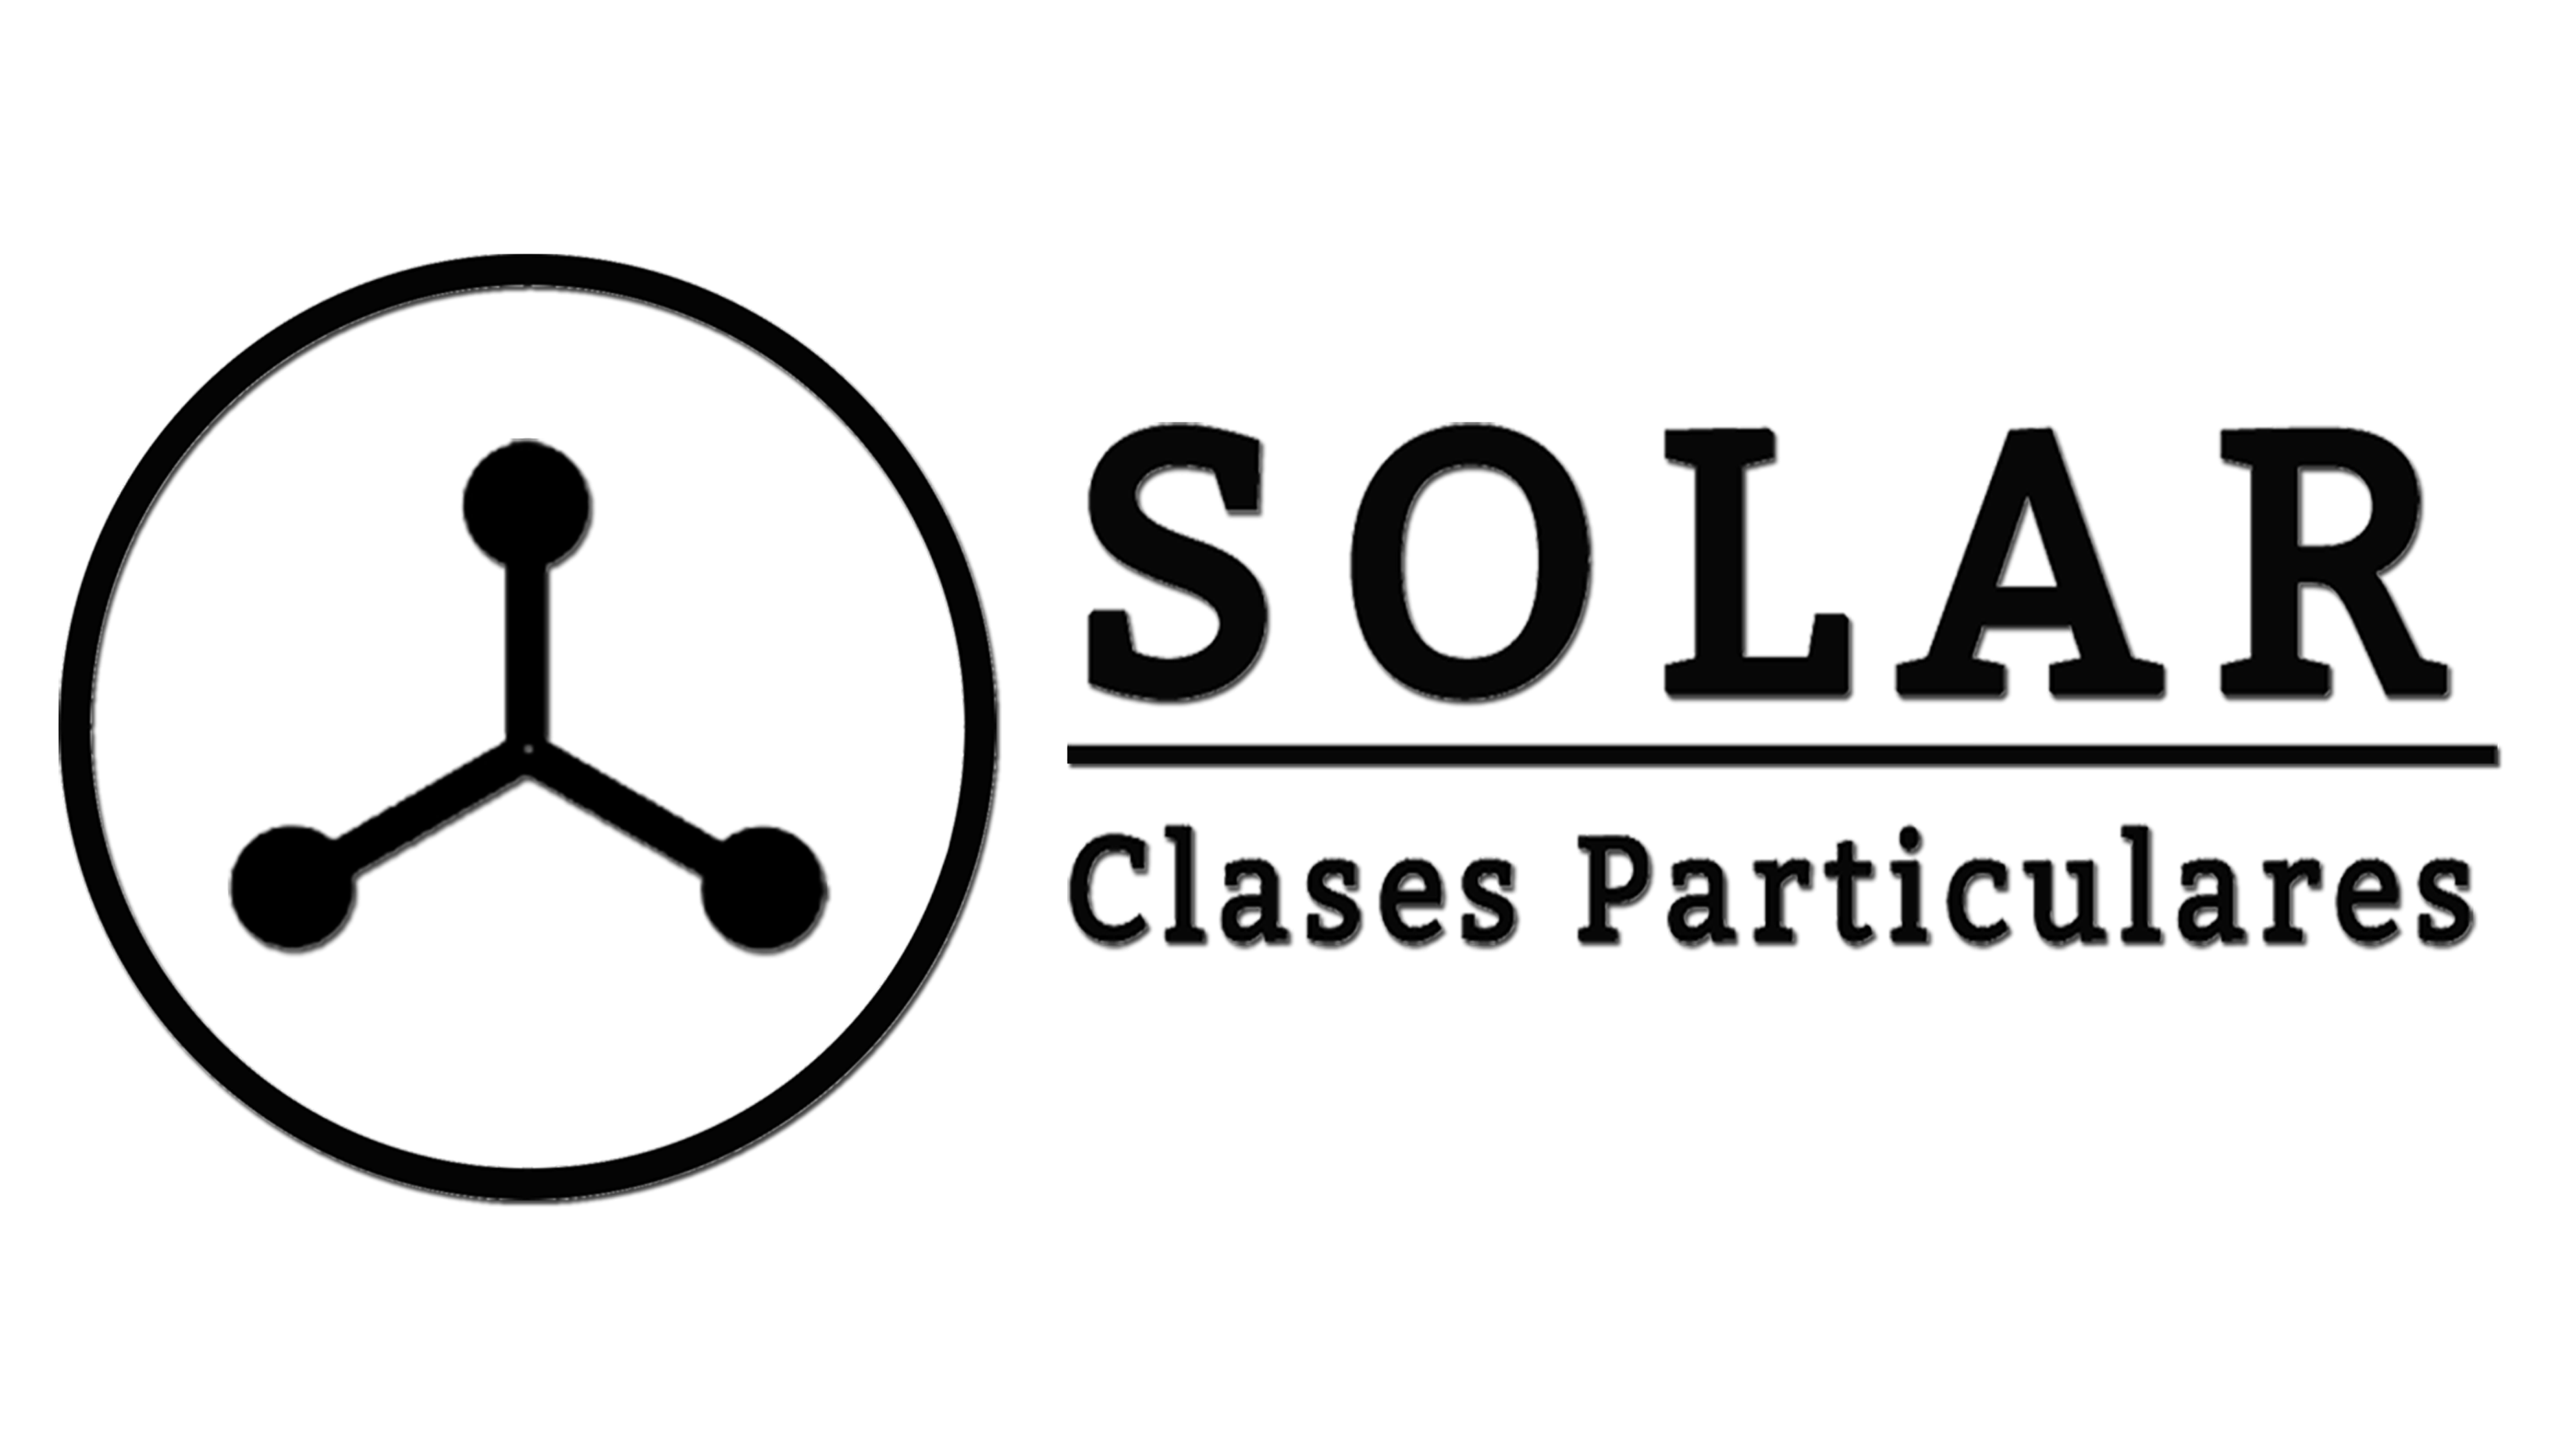 Solar - Clases Particulares